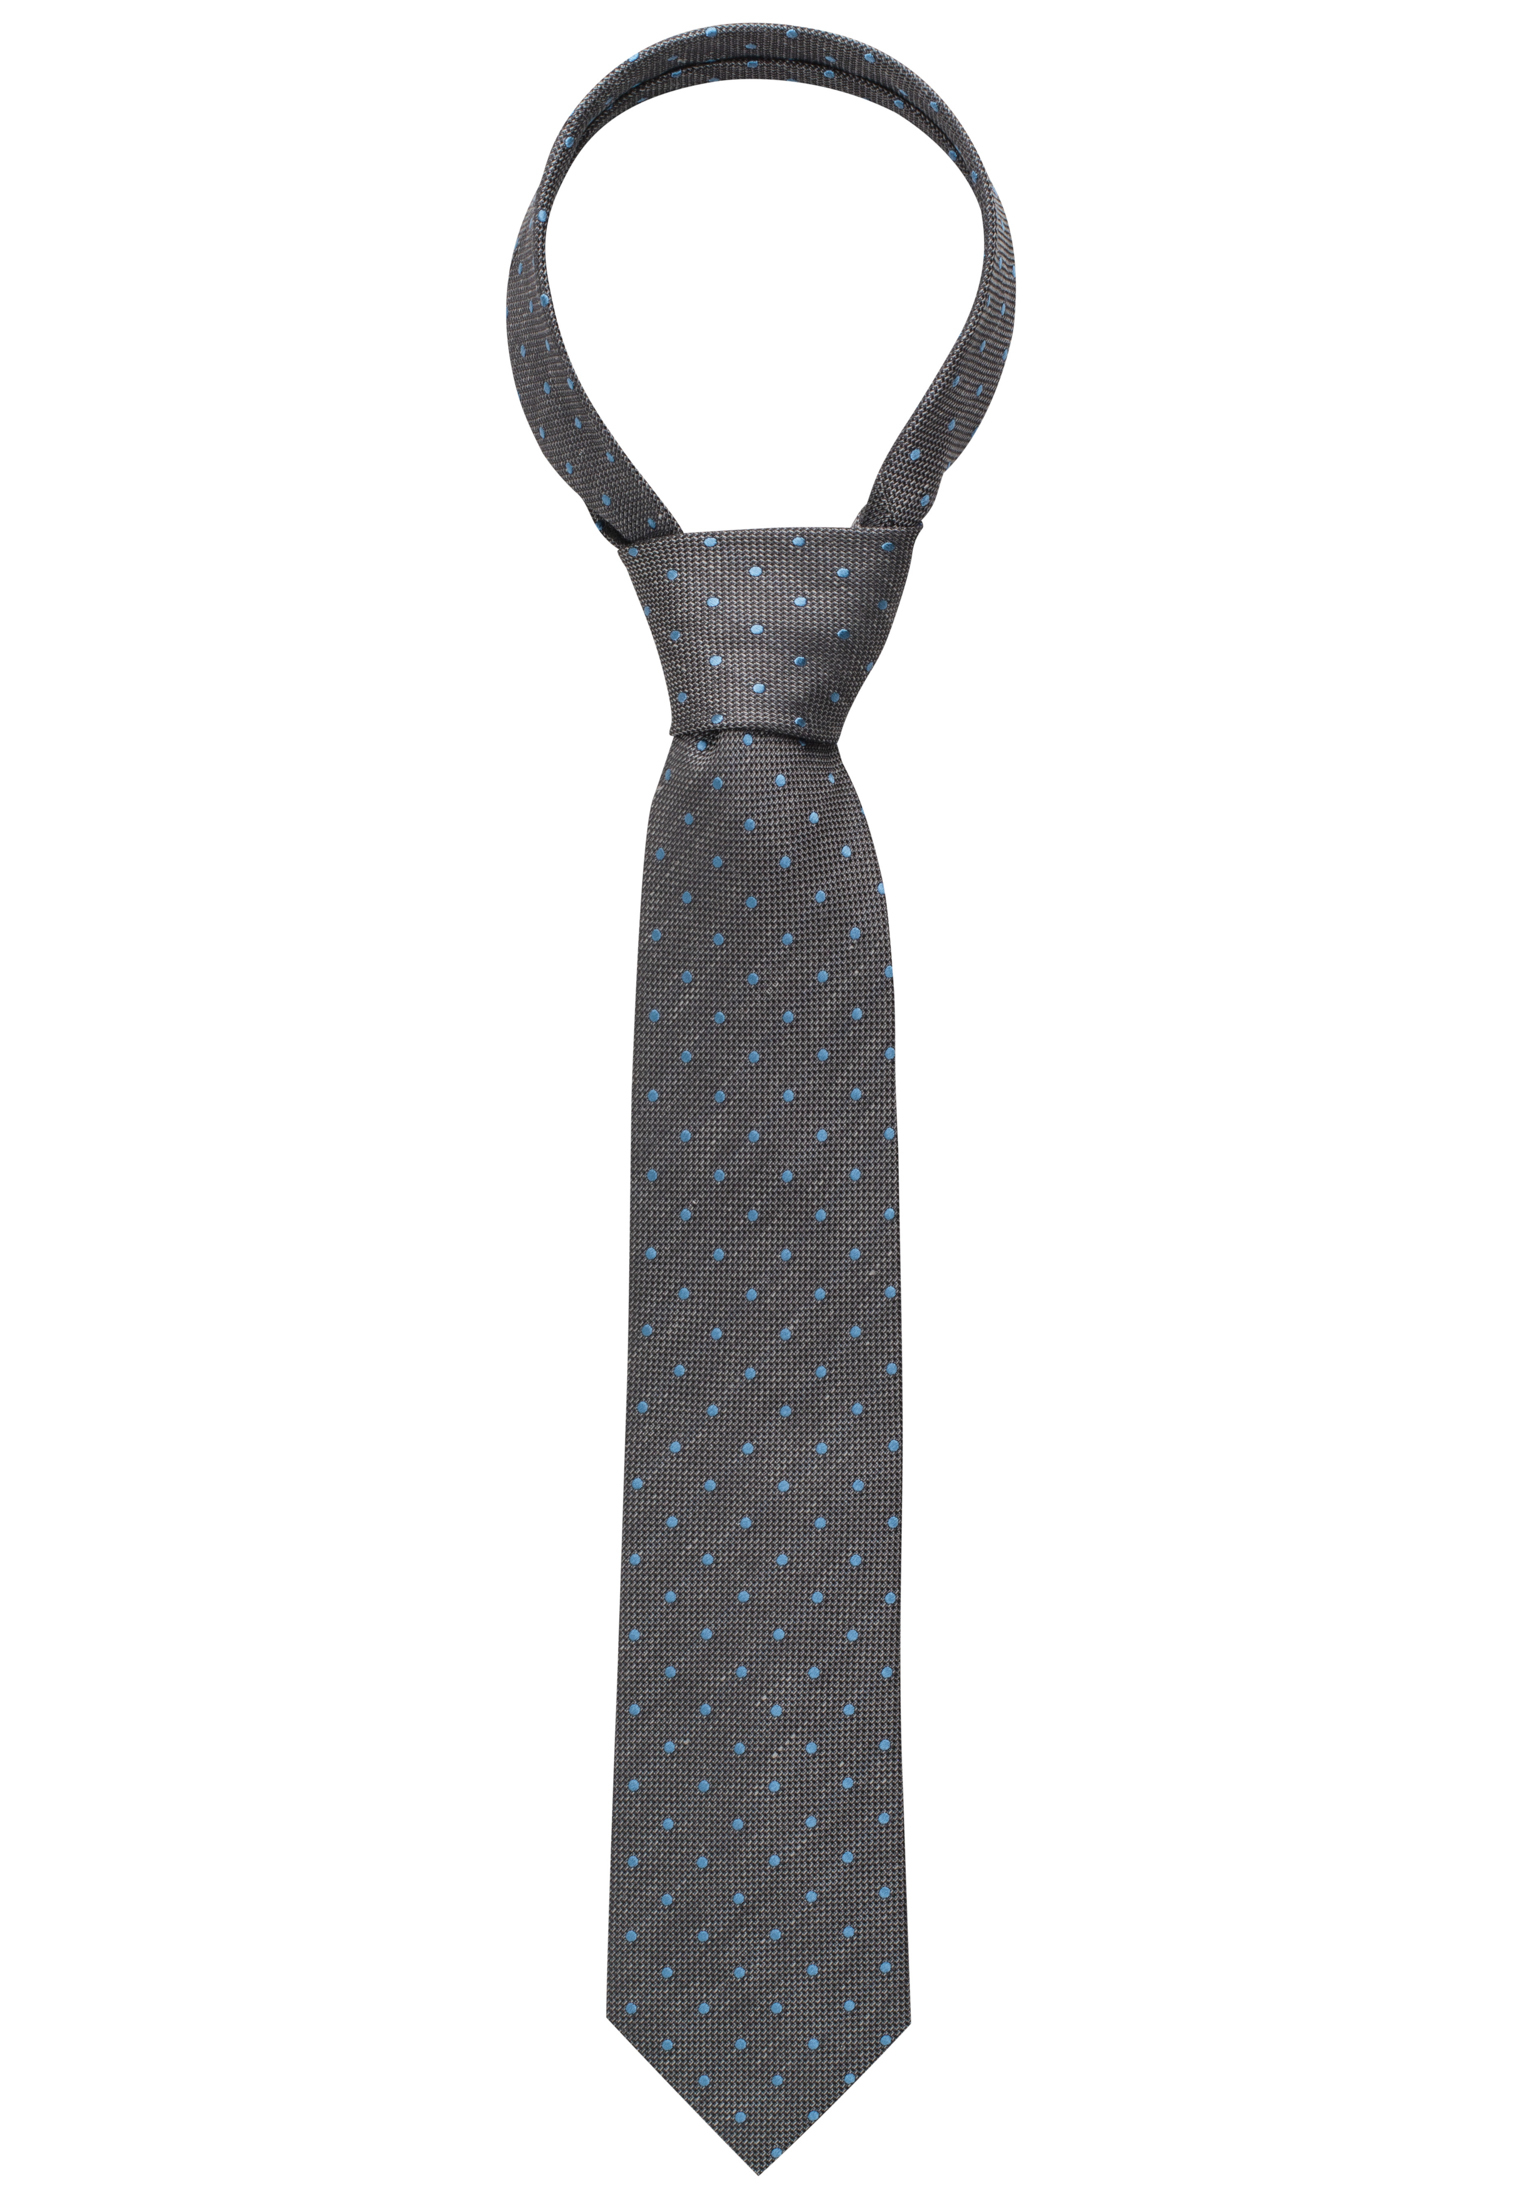 Krawatte in grau | | | 1AC00469-03-01-142 getupft 142 grau